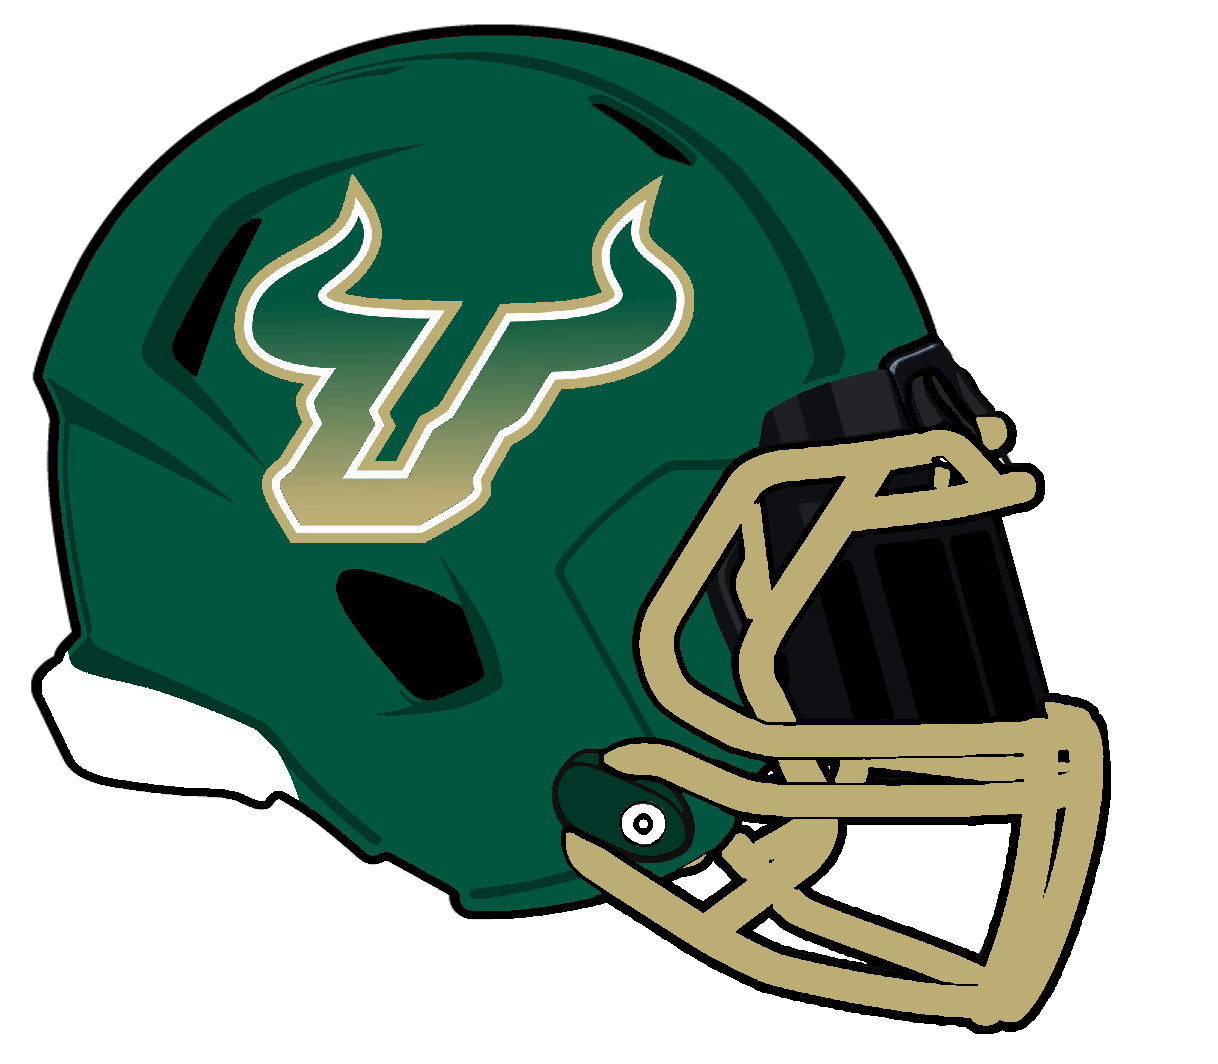 College Football Alternate Helmets - Concepts - Chris Creamer's ...